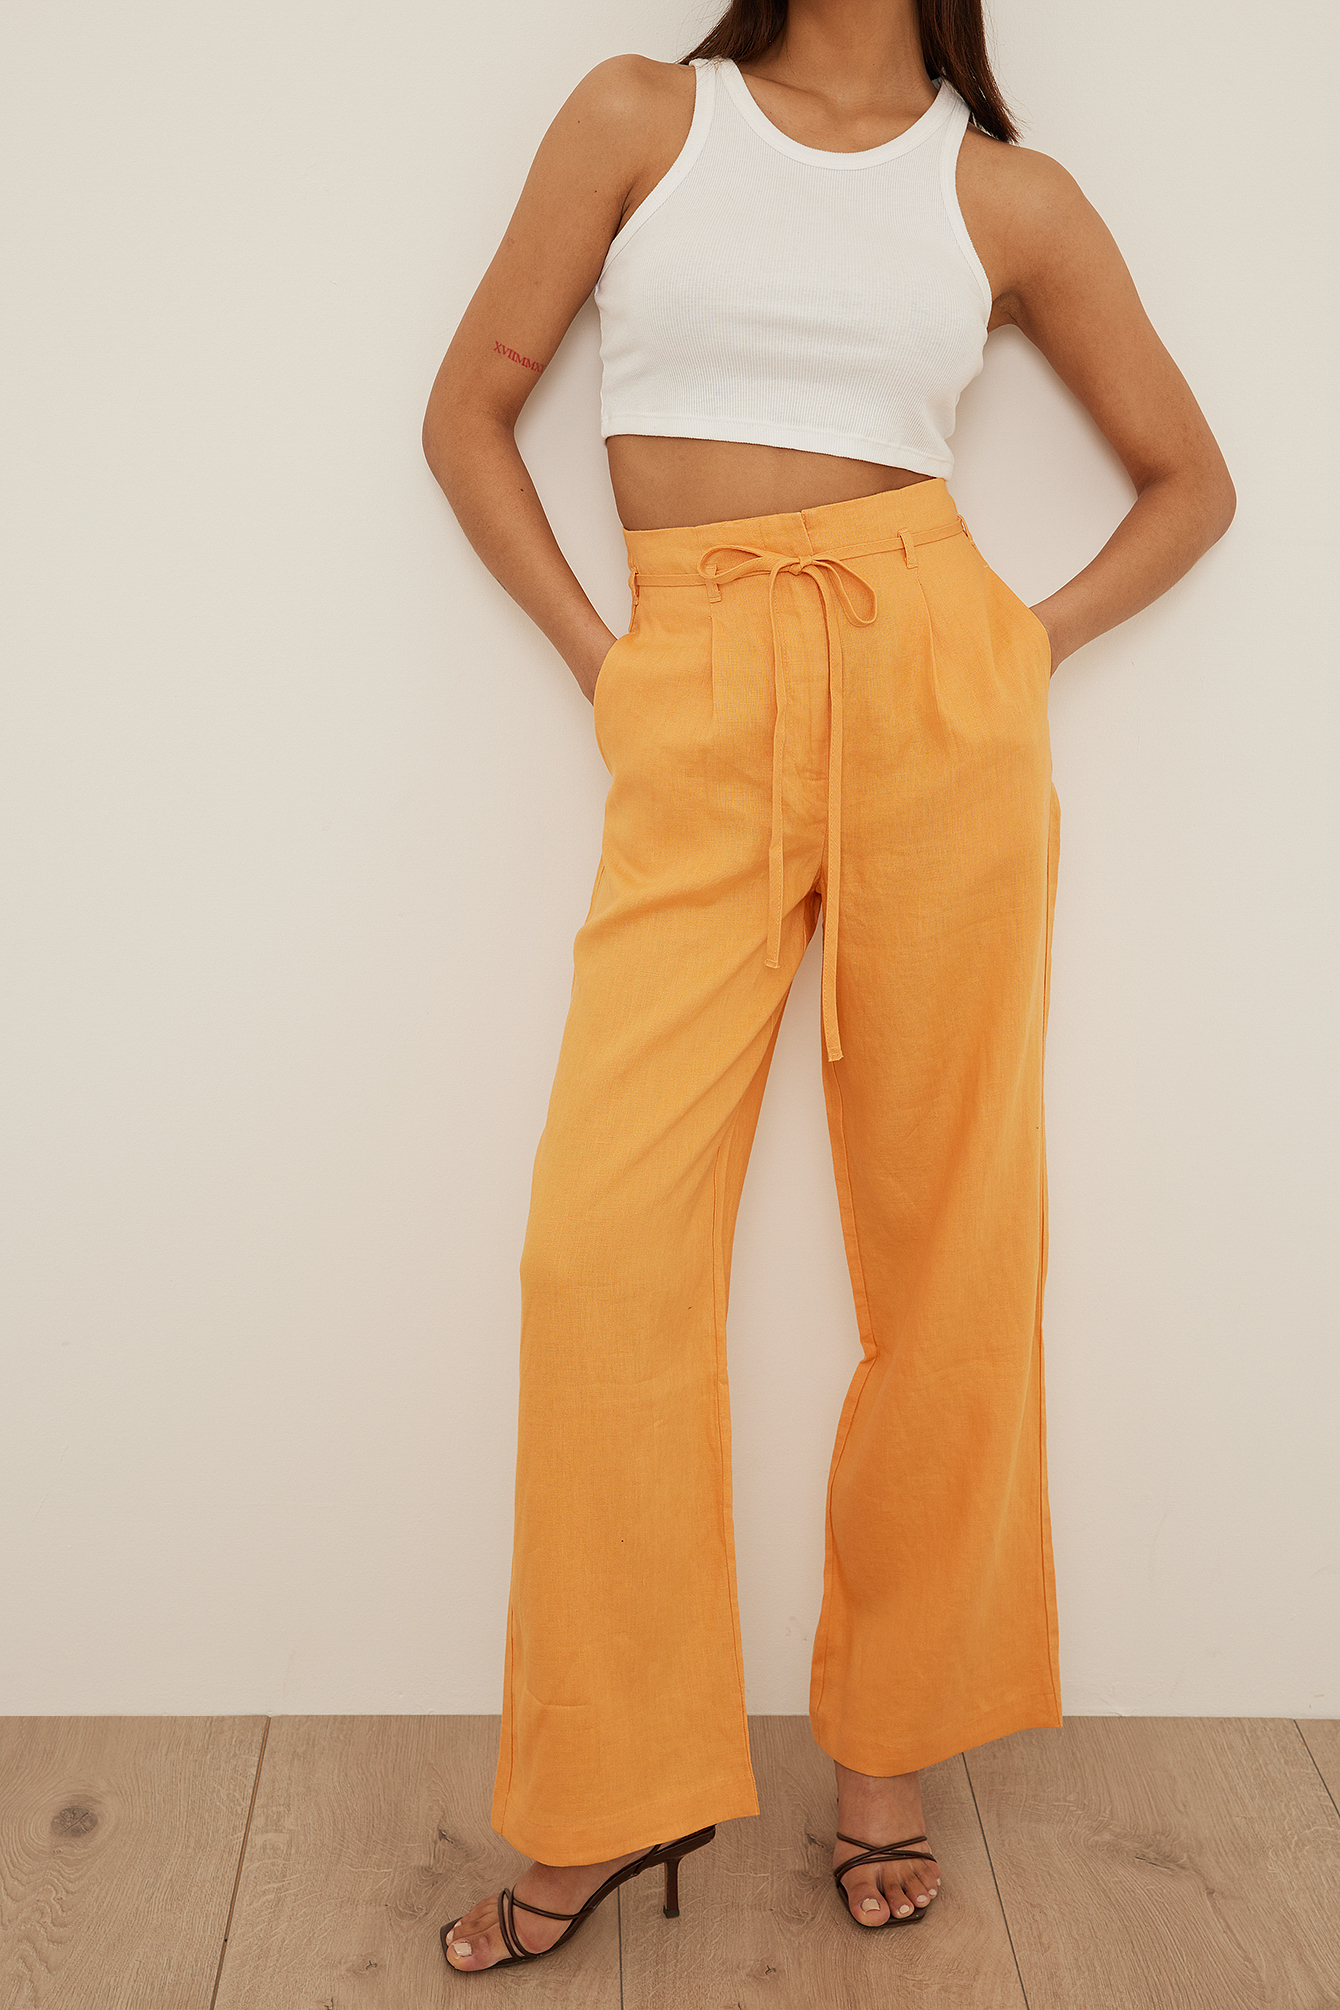 Orange Pantalon en lin taille haute